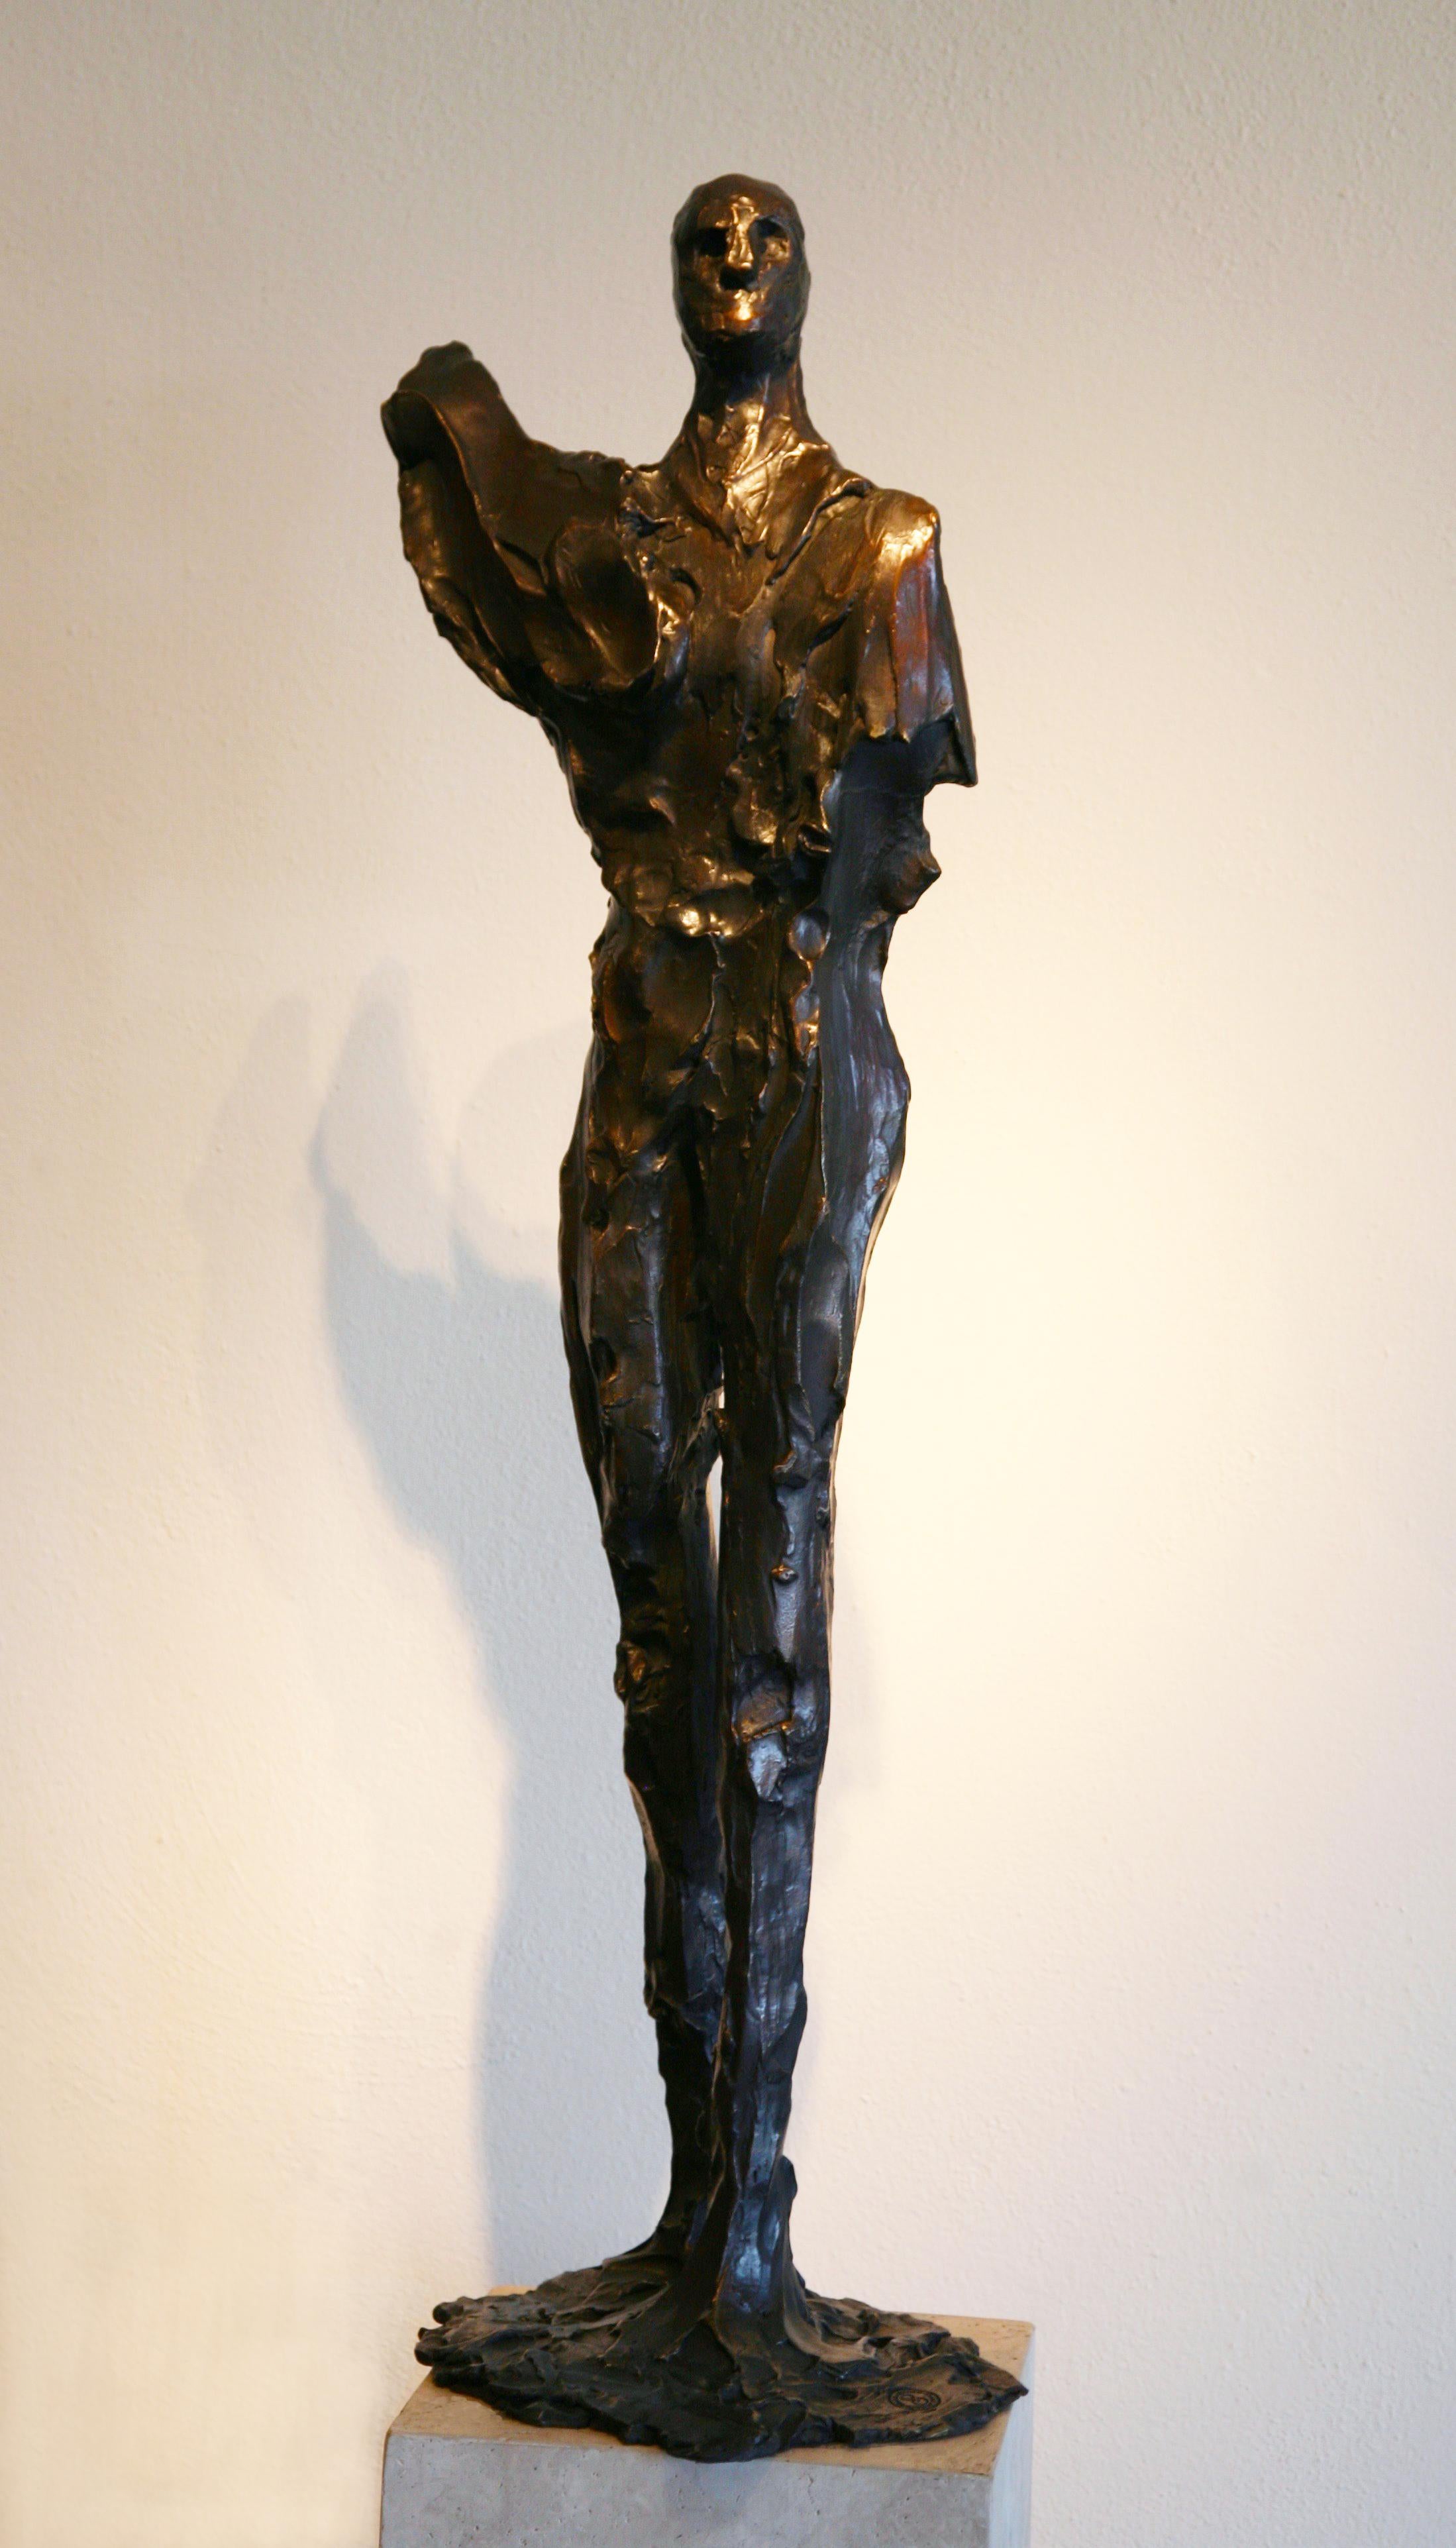 Bronze sculpture “Painted Man” - Sculpture by Frank Arnold